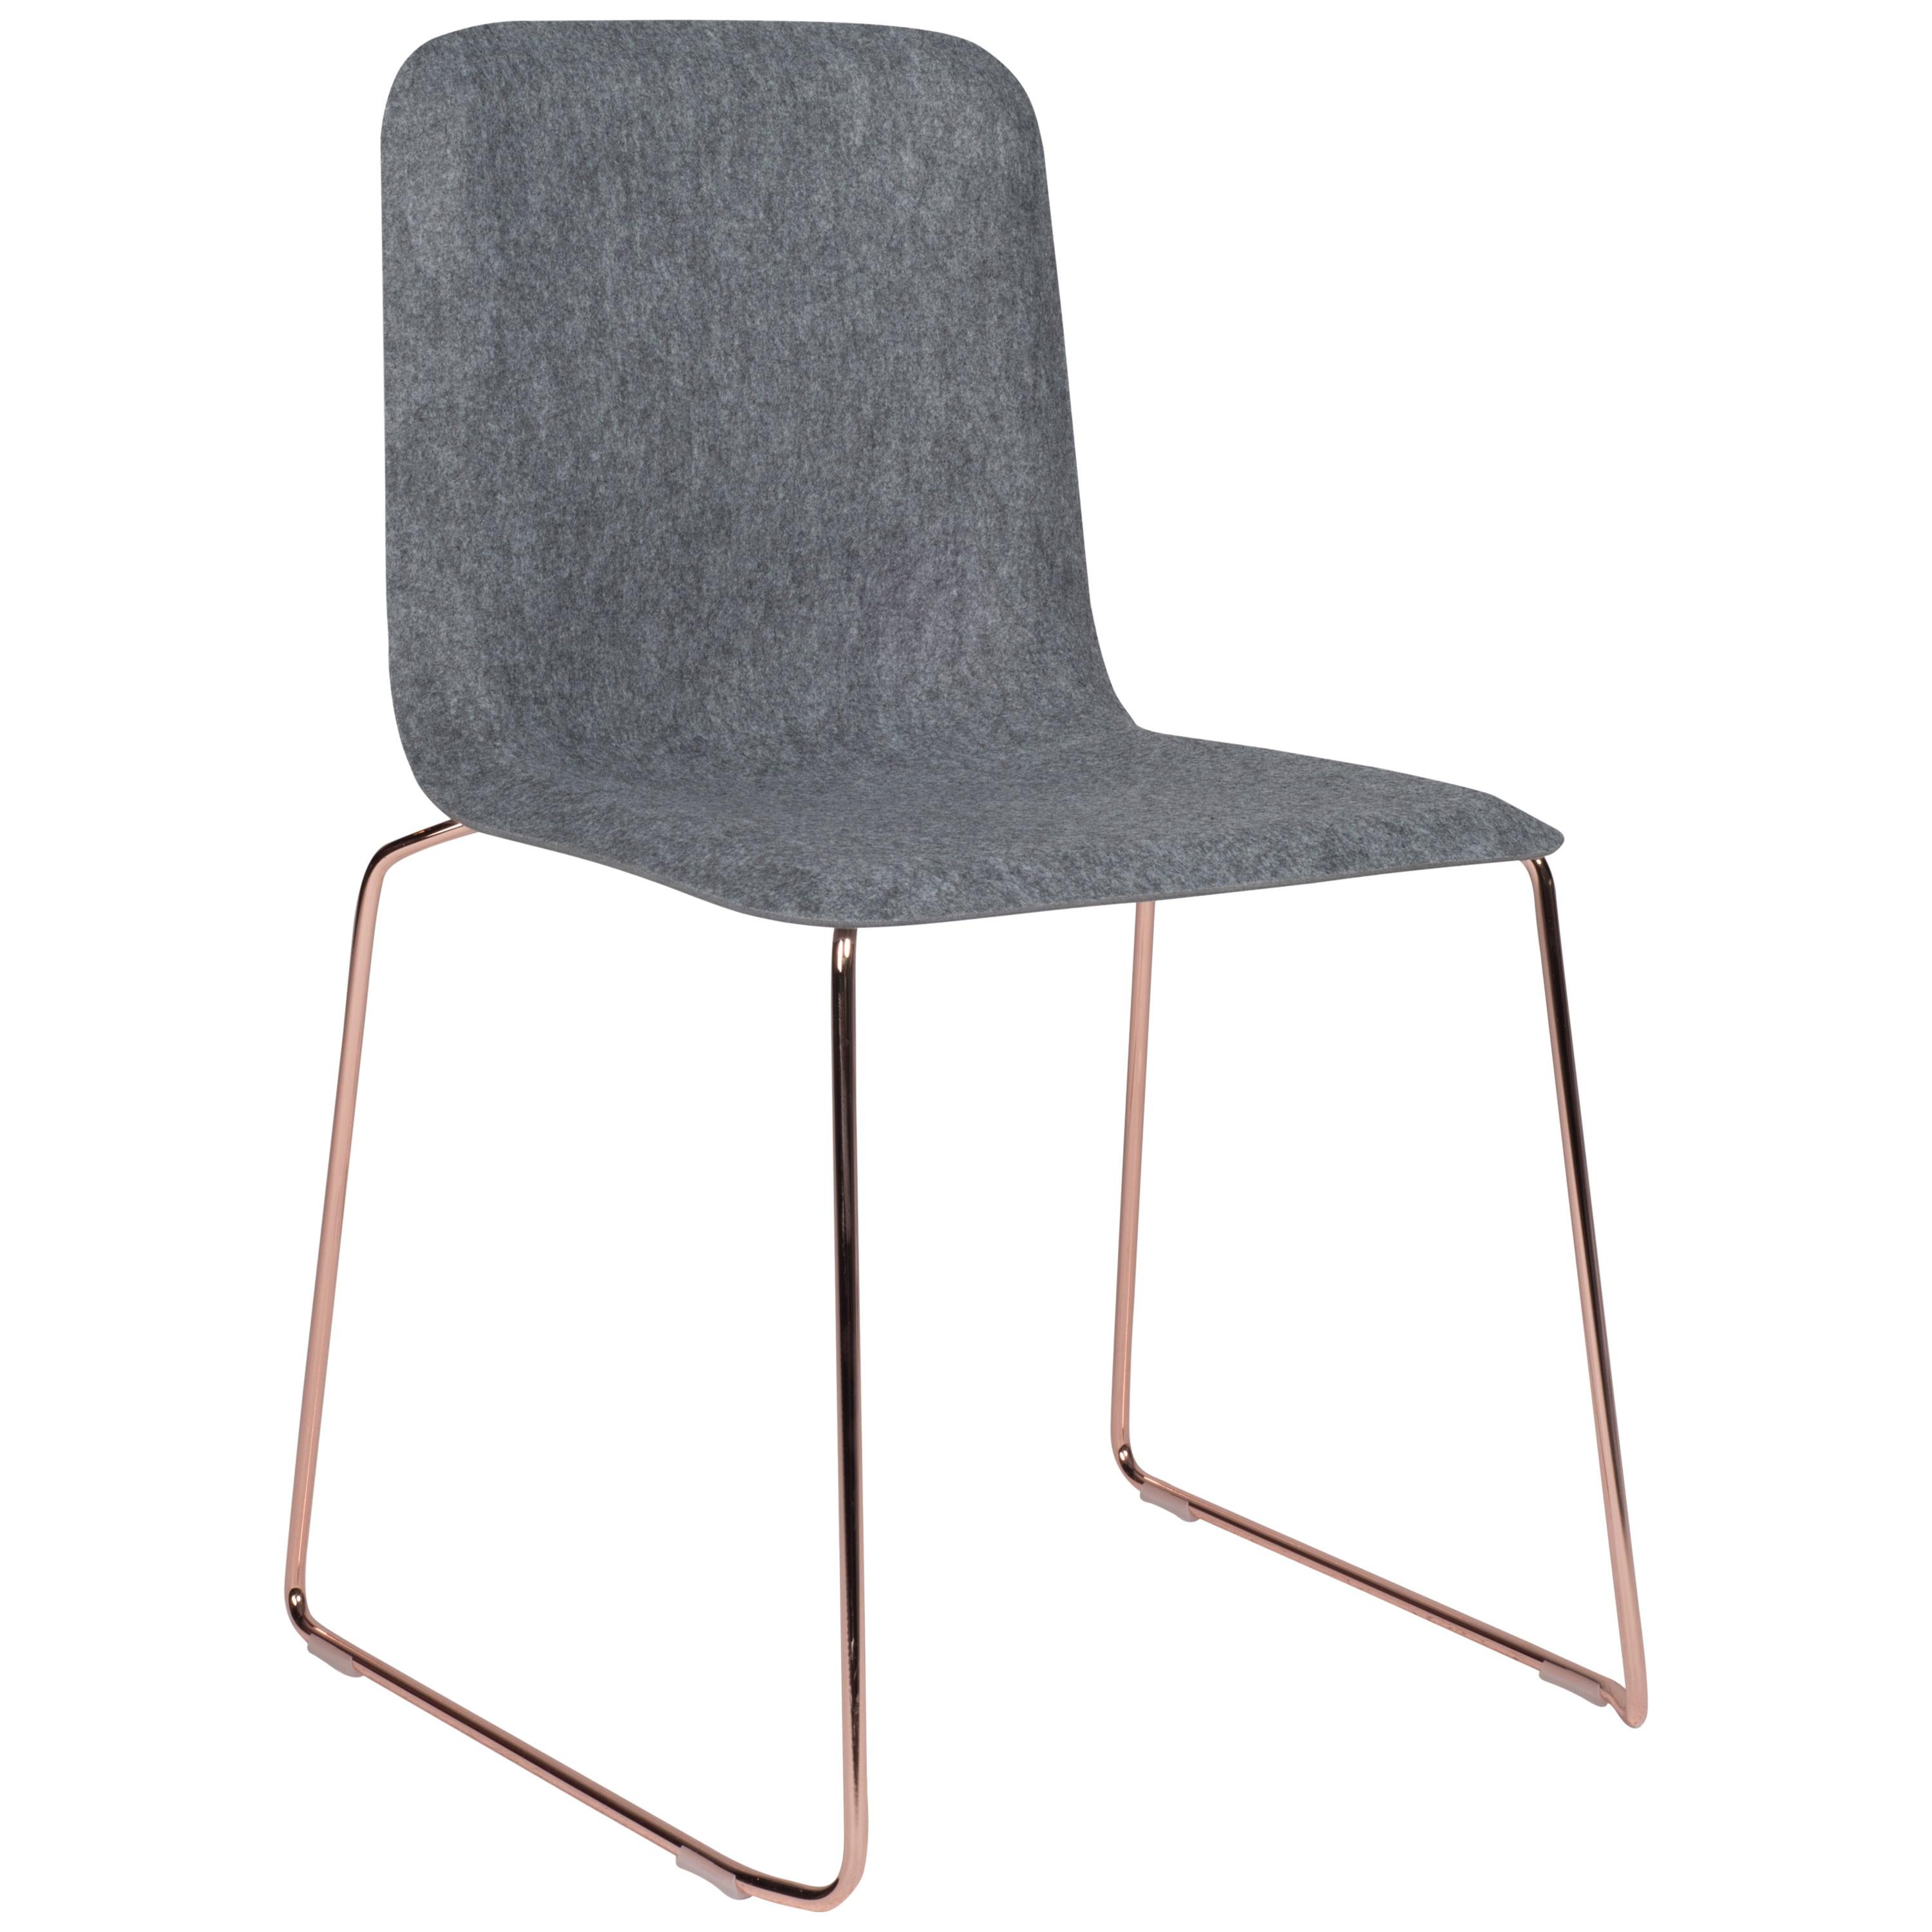 Lensvelt This 141 Felt Chair For Sale